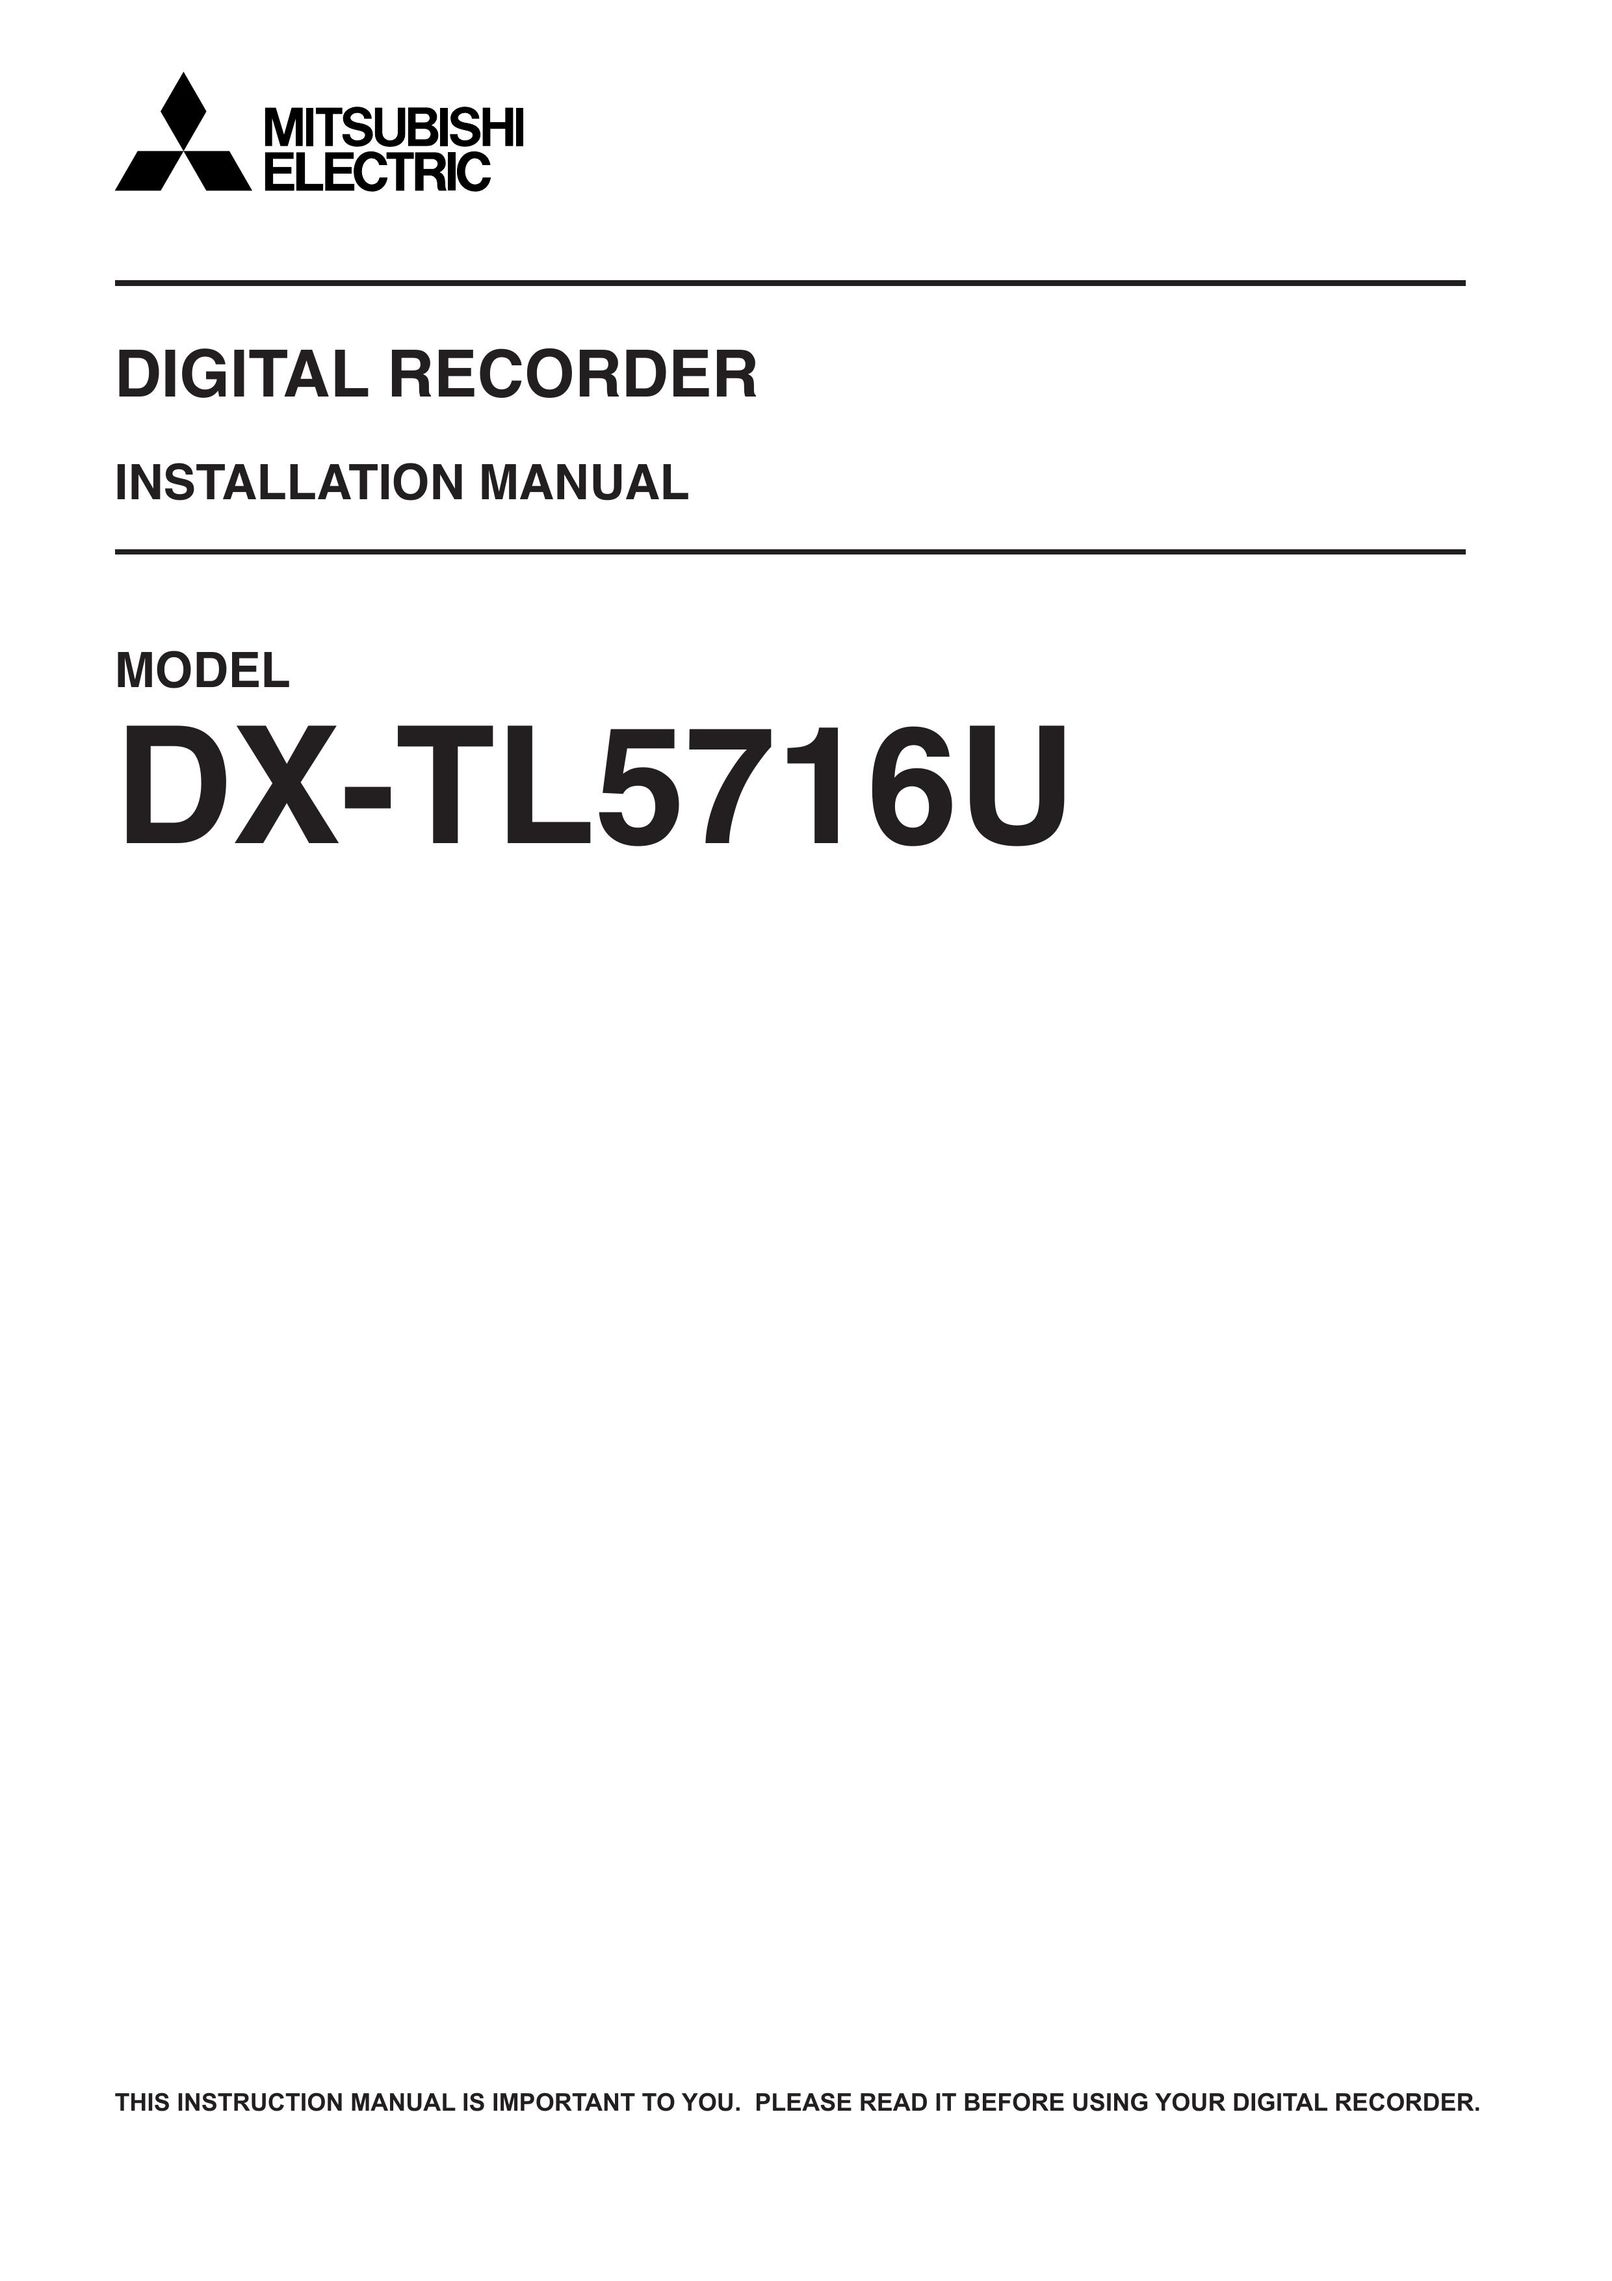 Mitsubishi Electronics DX-TL5716U DVR User Manual